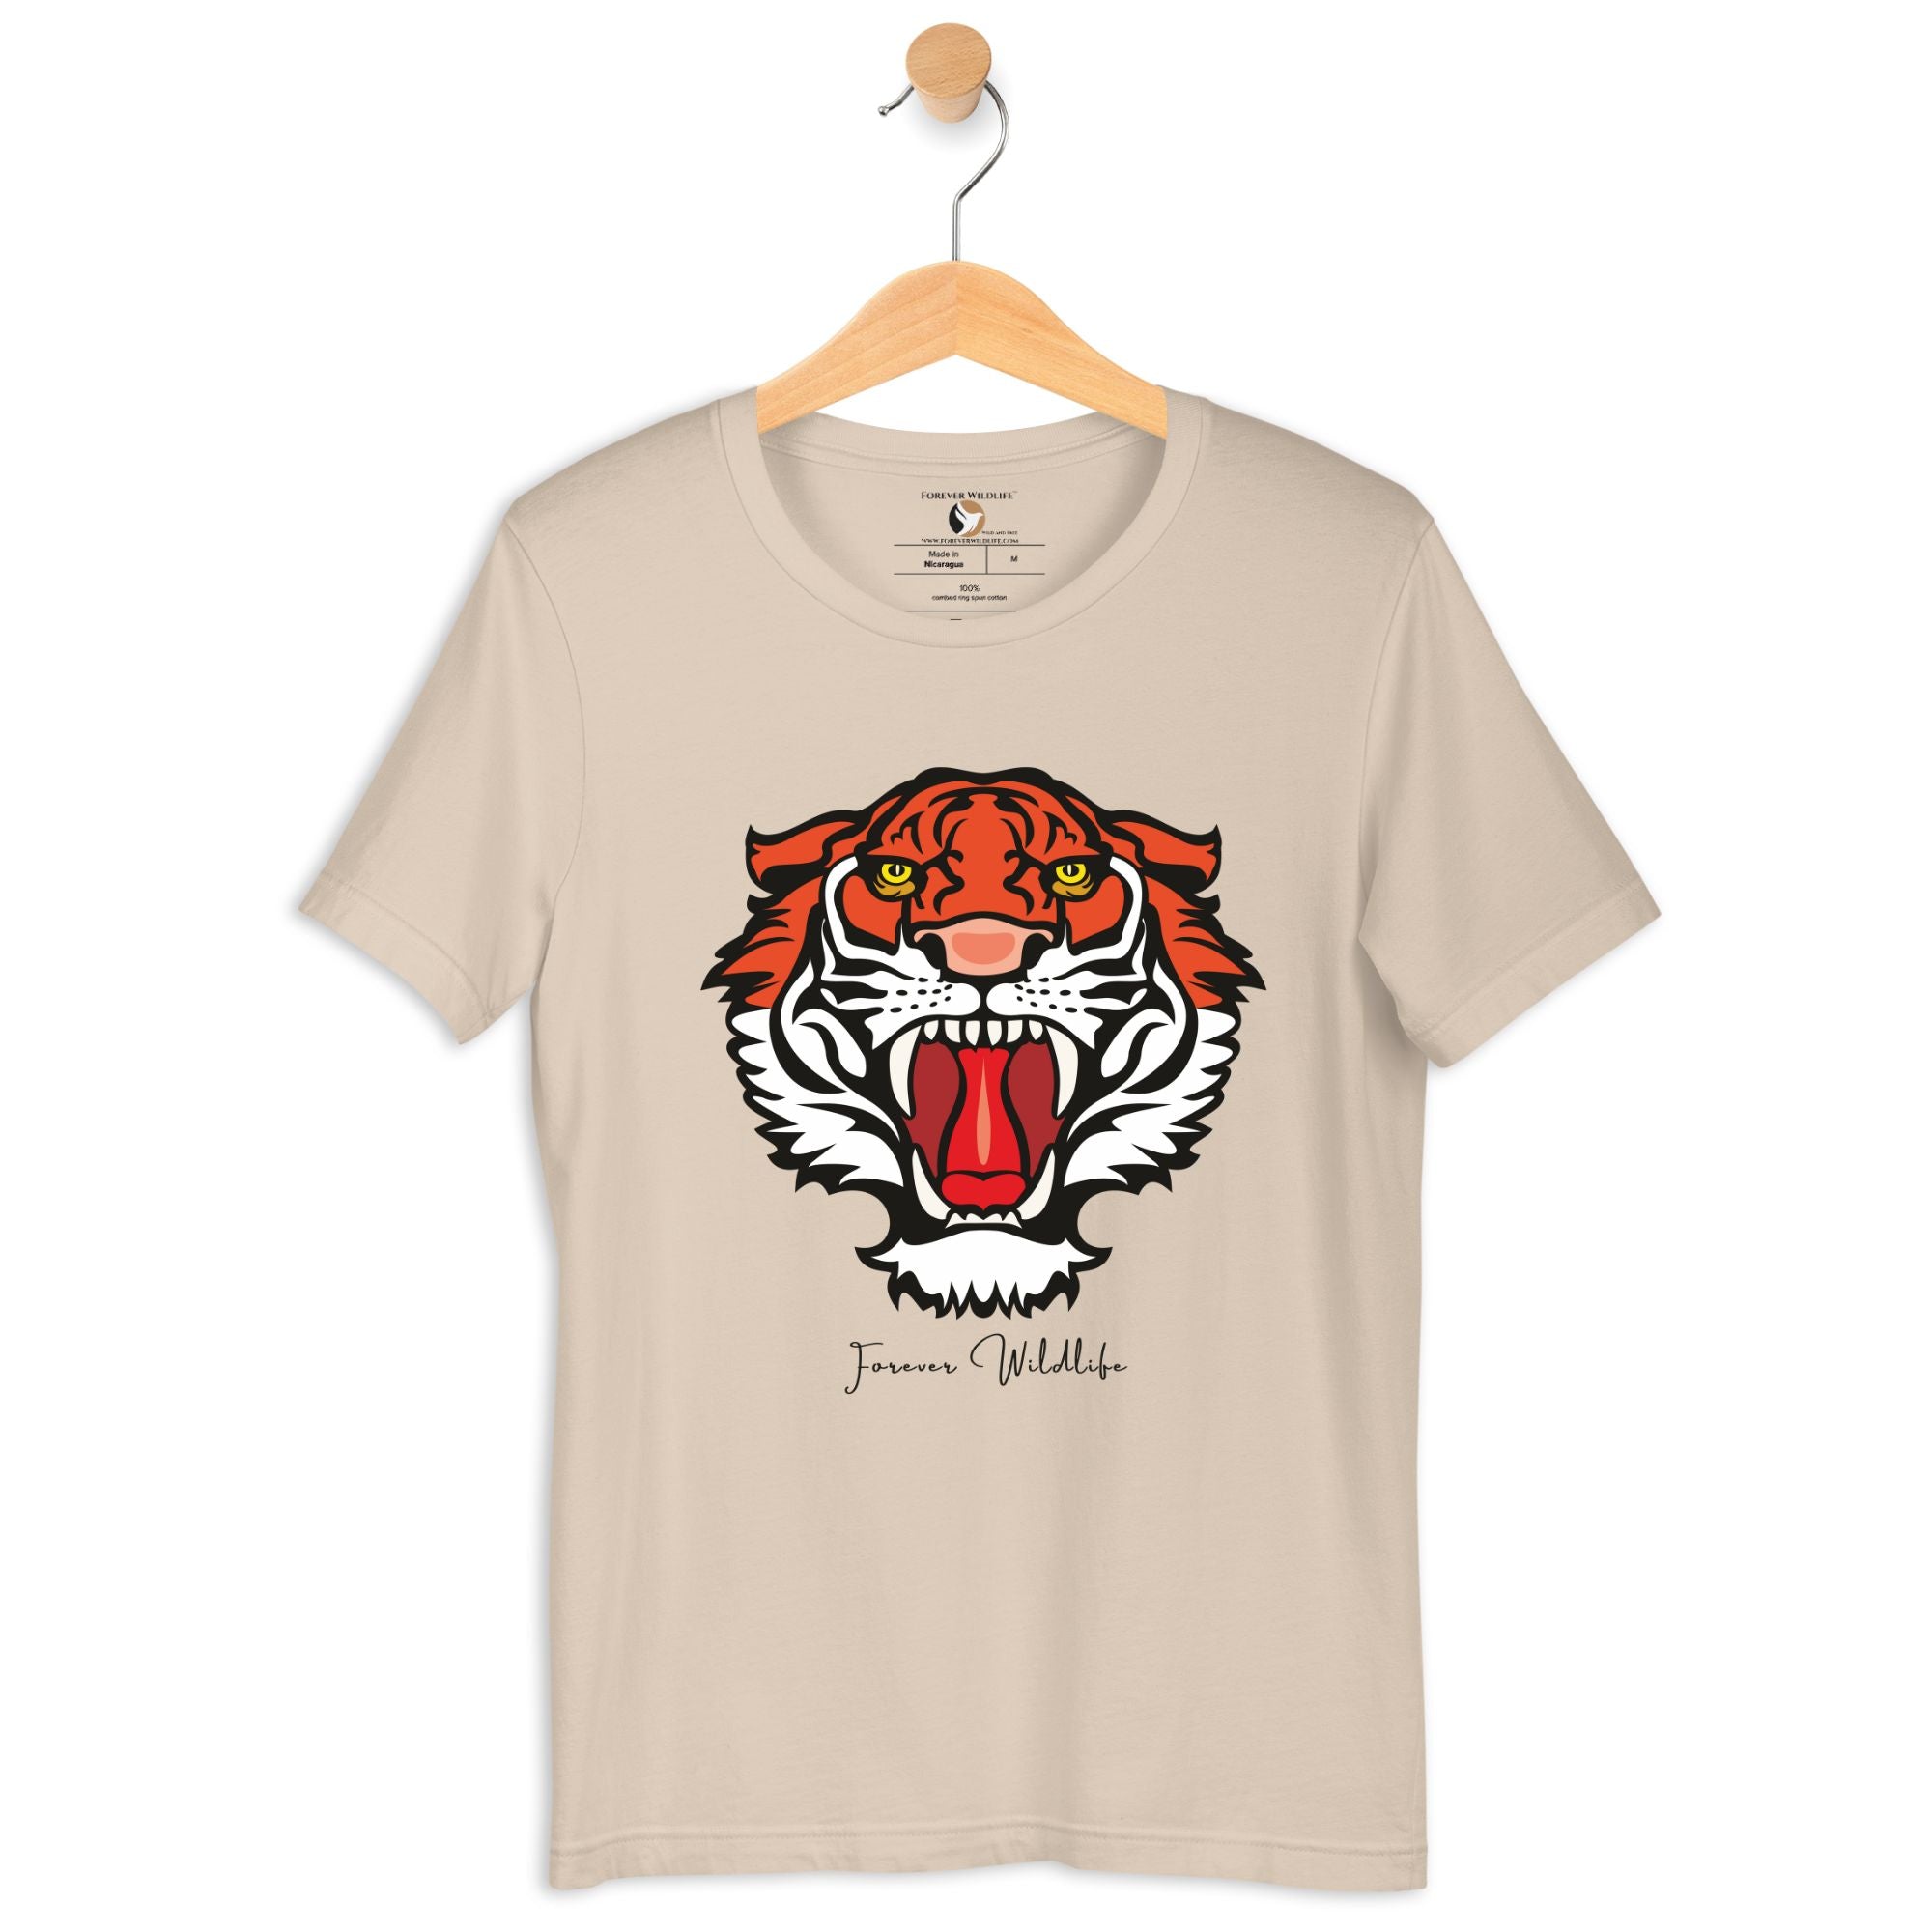 Tiger T-Shirt in Soft Cream – Premium Wildlife T-Shirt Design, Wildlife Clothing & Apparel from Forever Wildlife